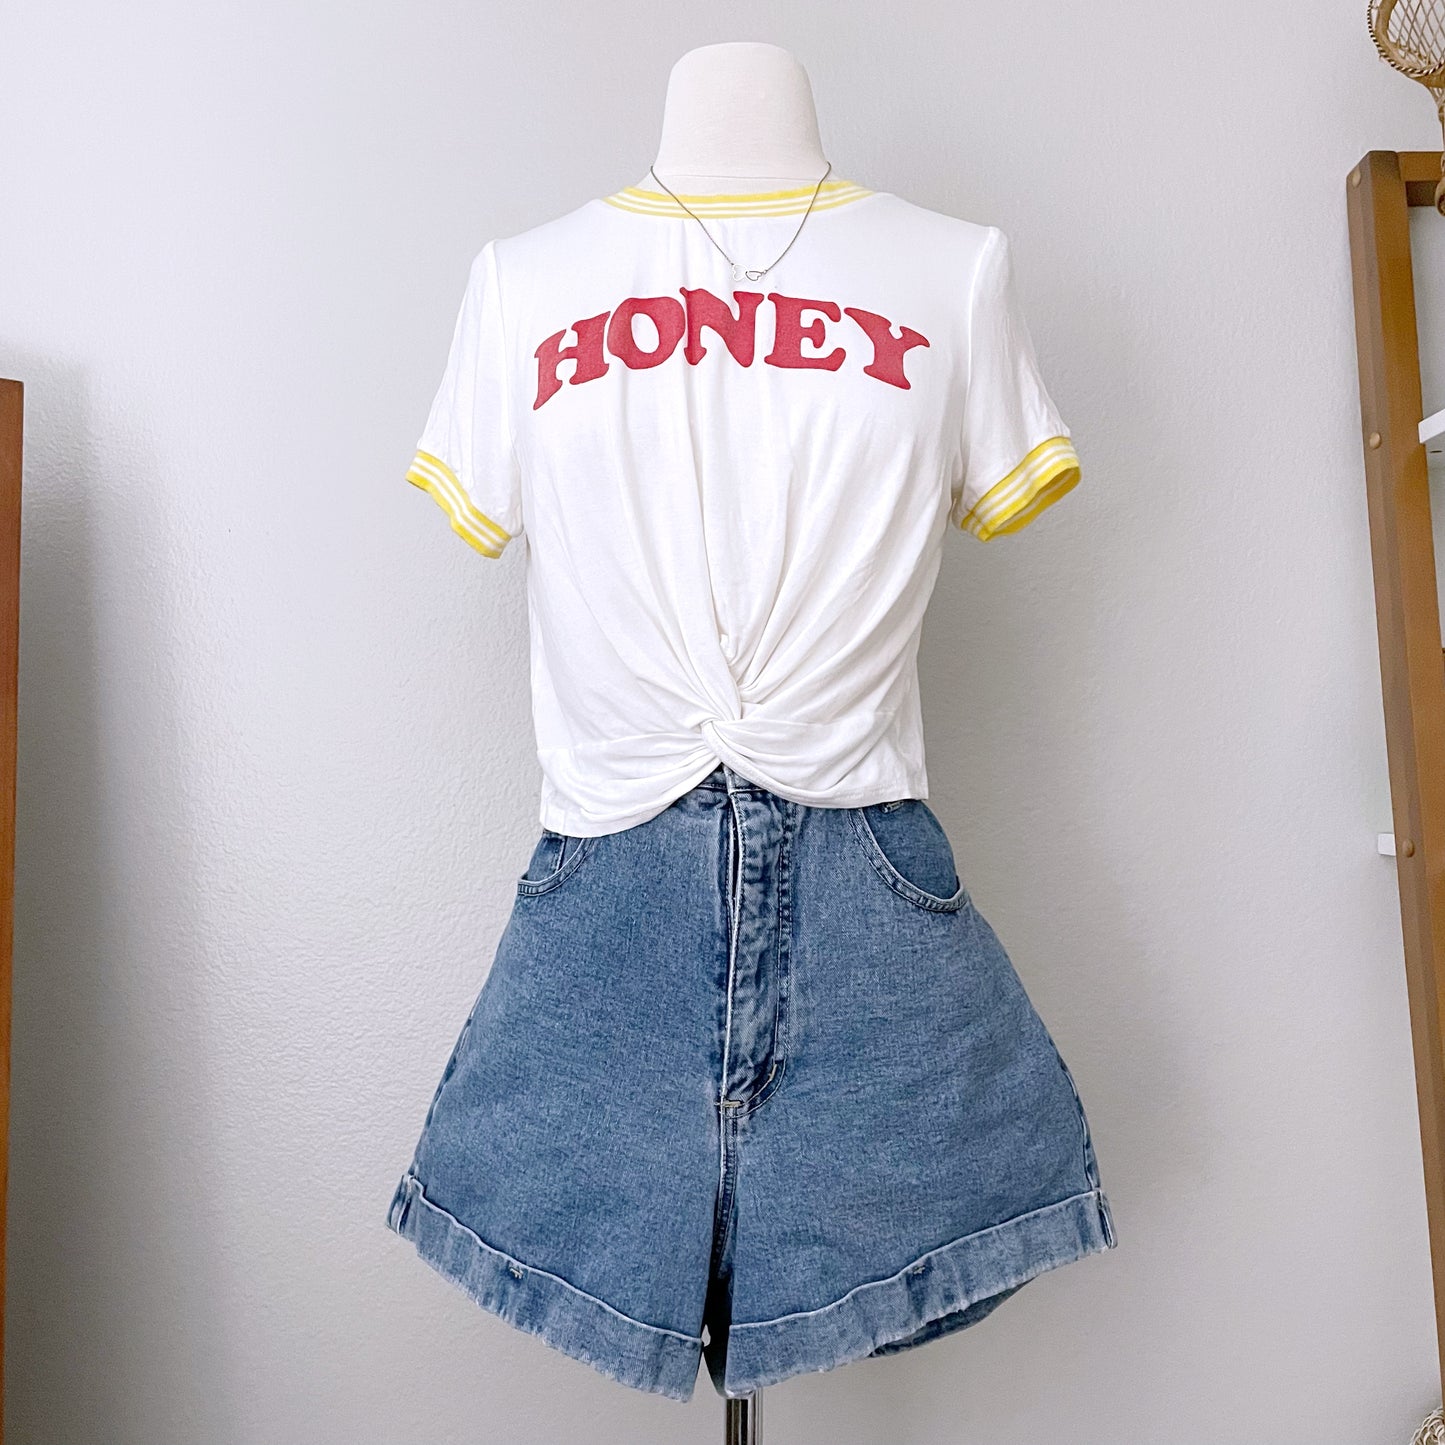 Honey Cropped Short Sleeve T-Shirt (L)